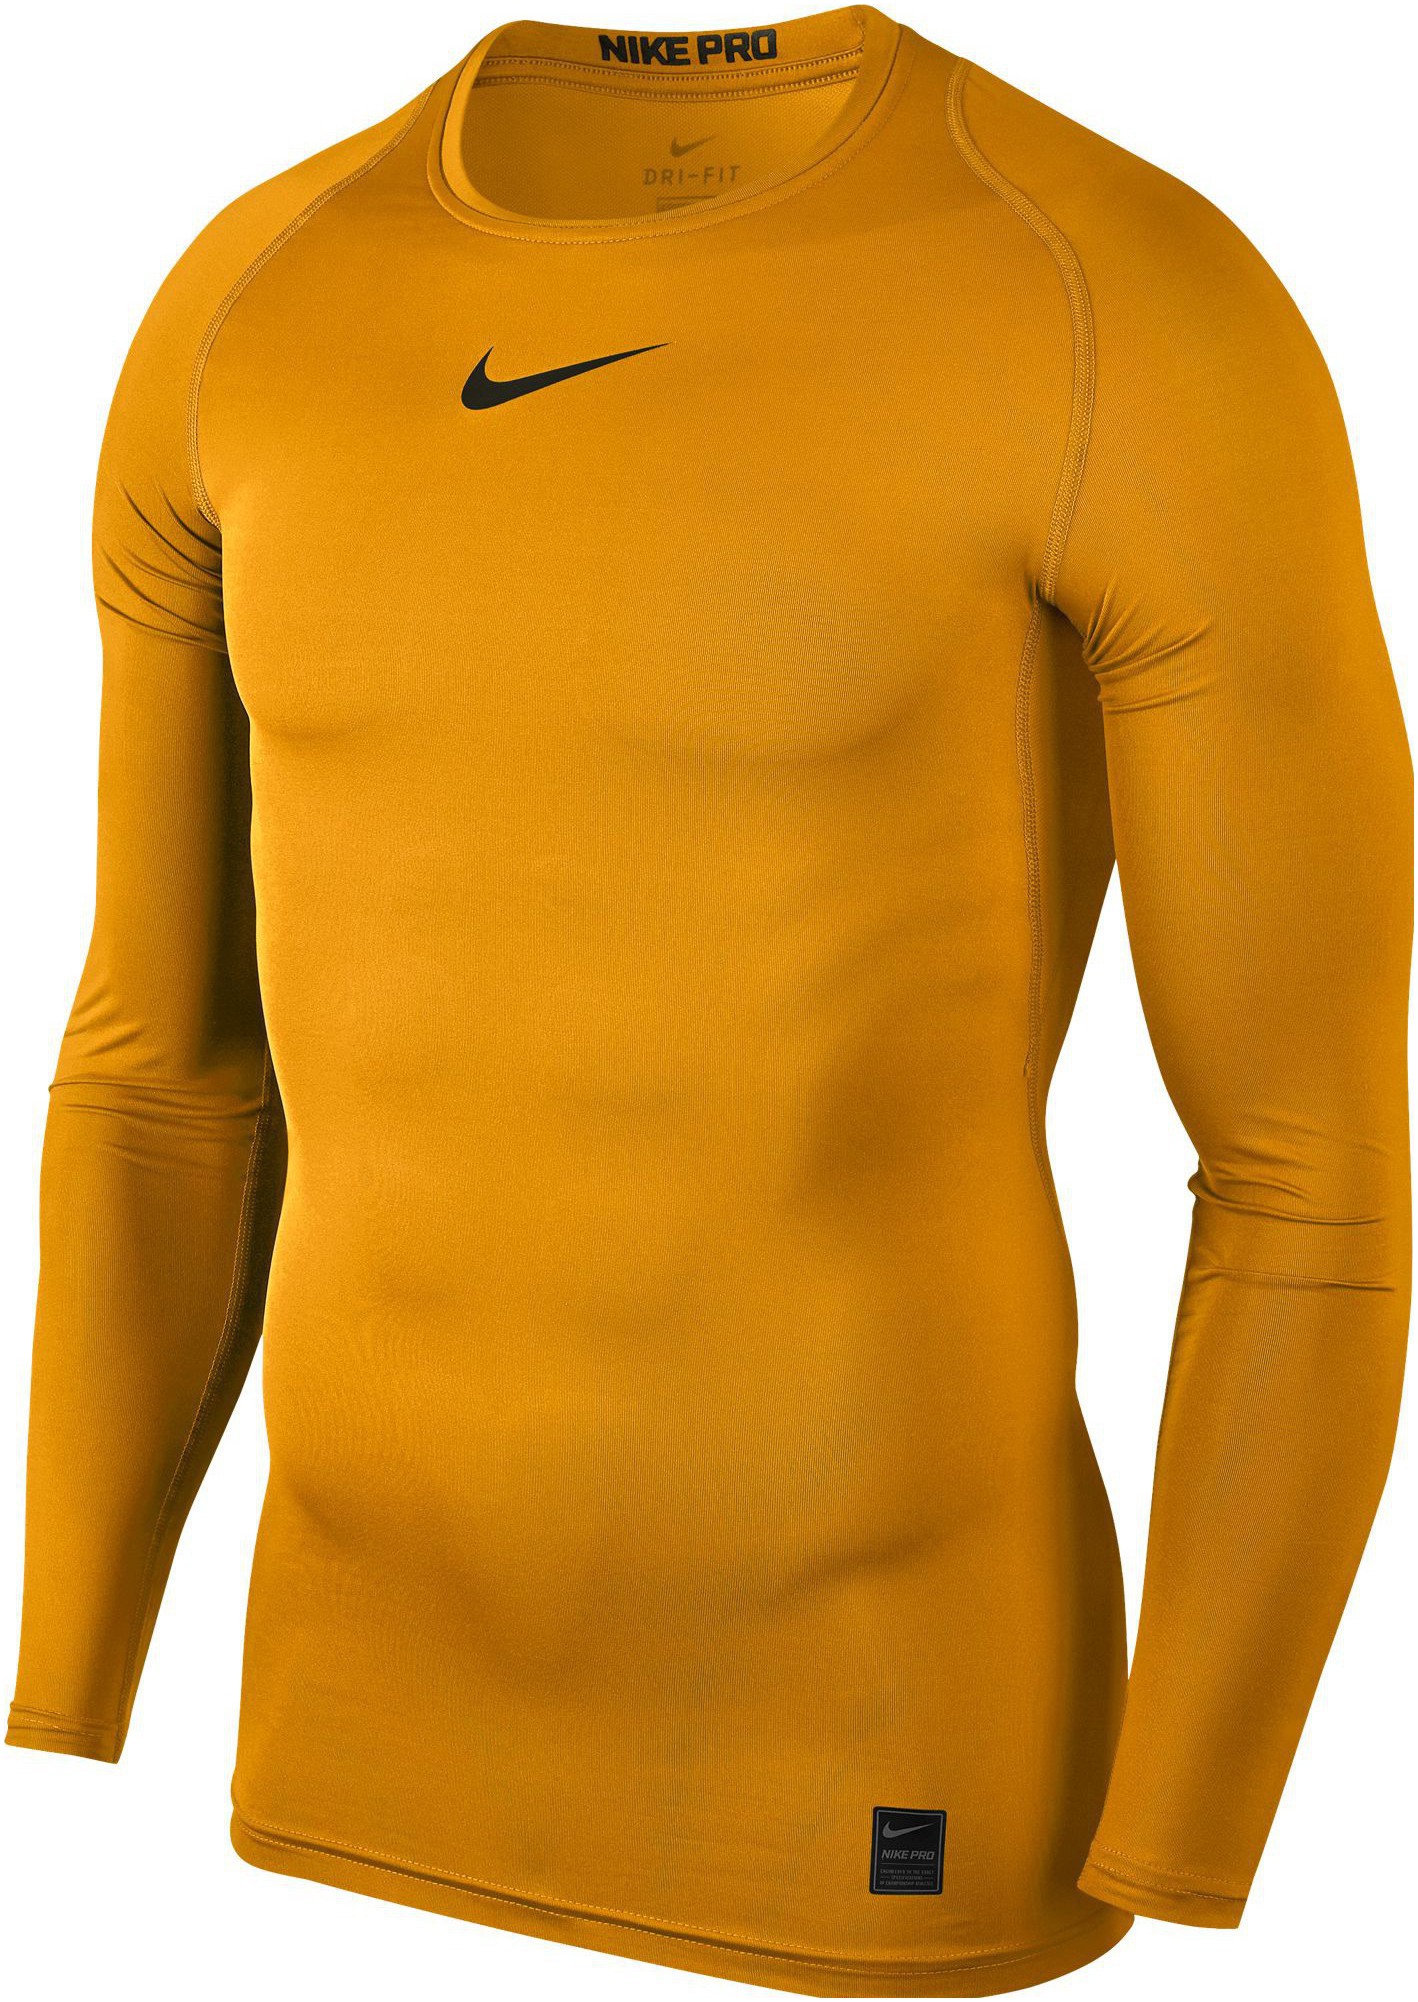 Mens compression long sleeve shirt Nike PRO TOP yellow